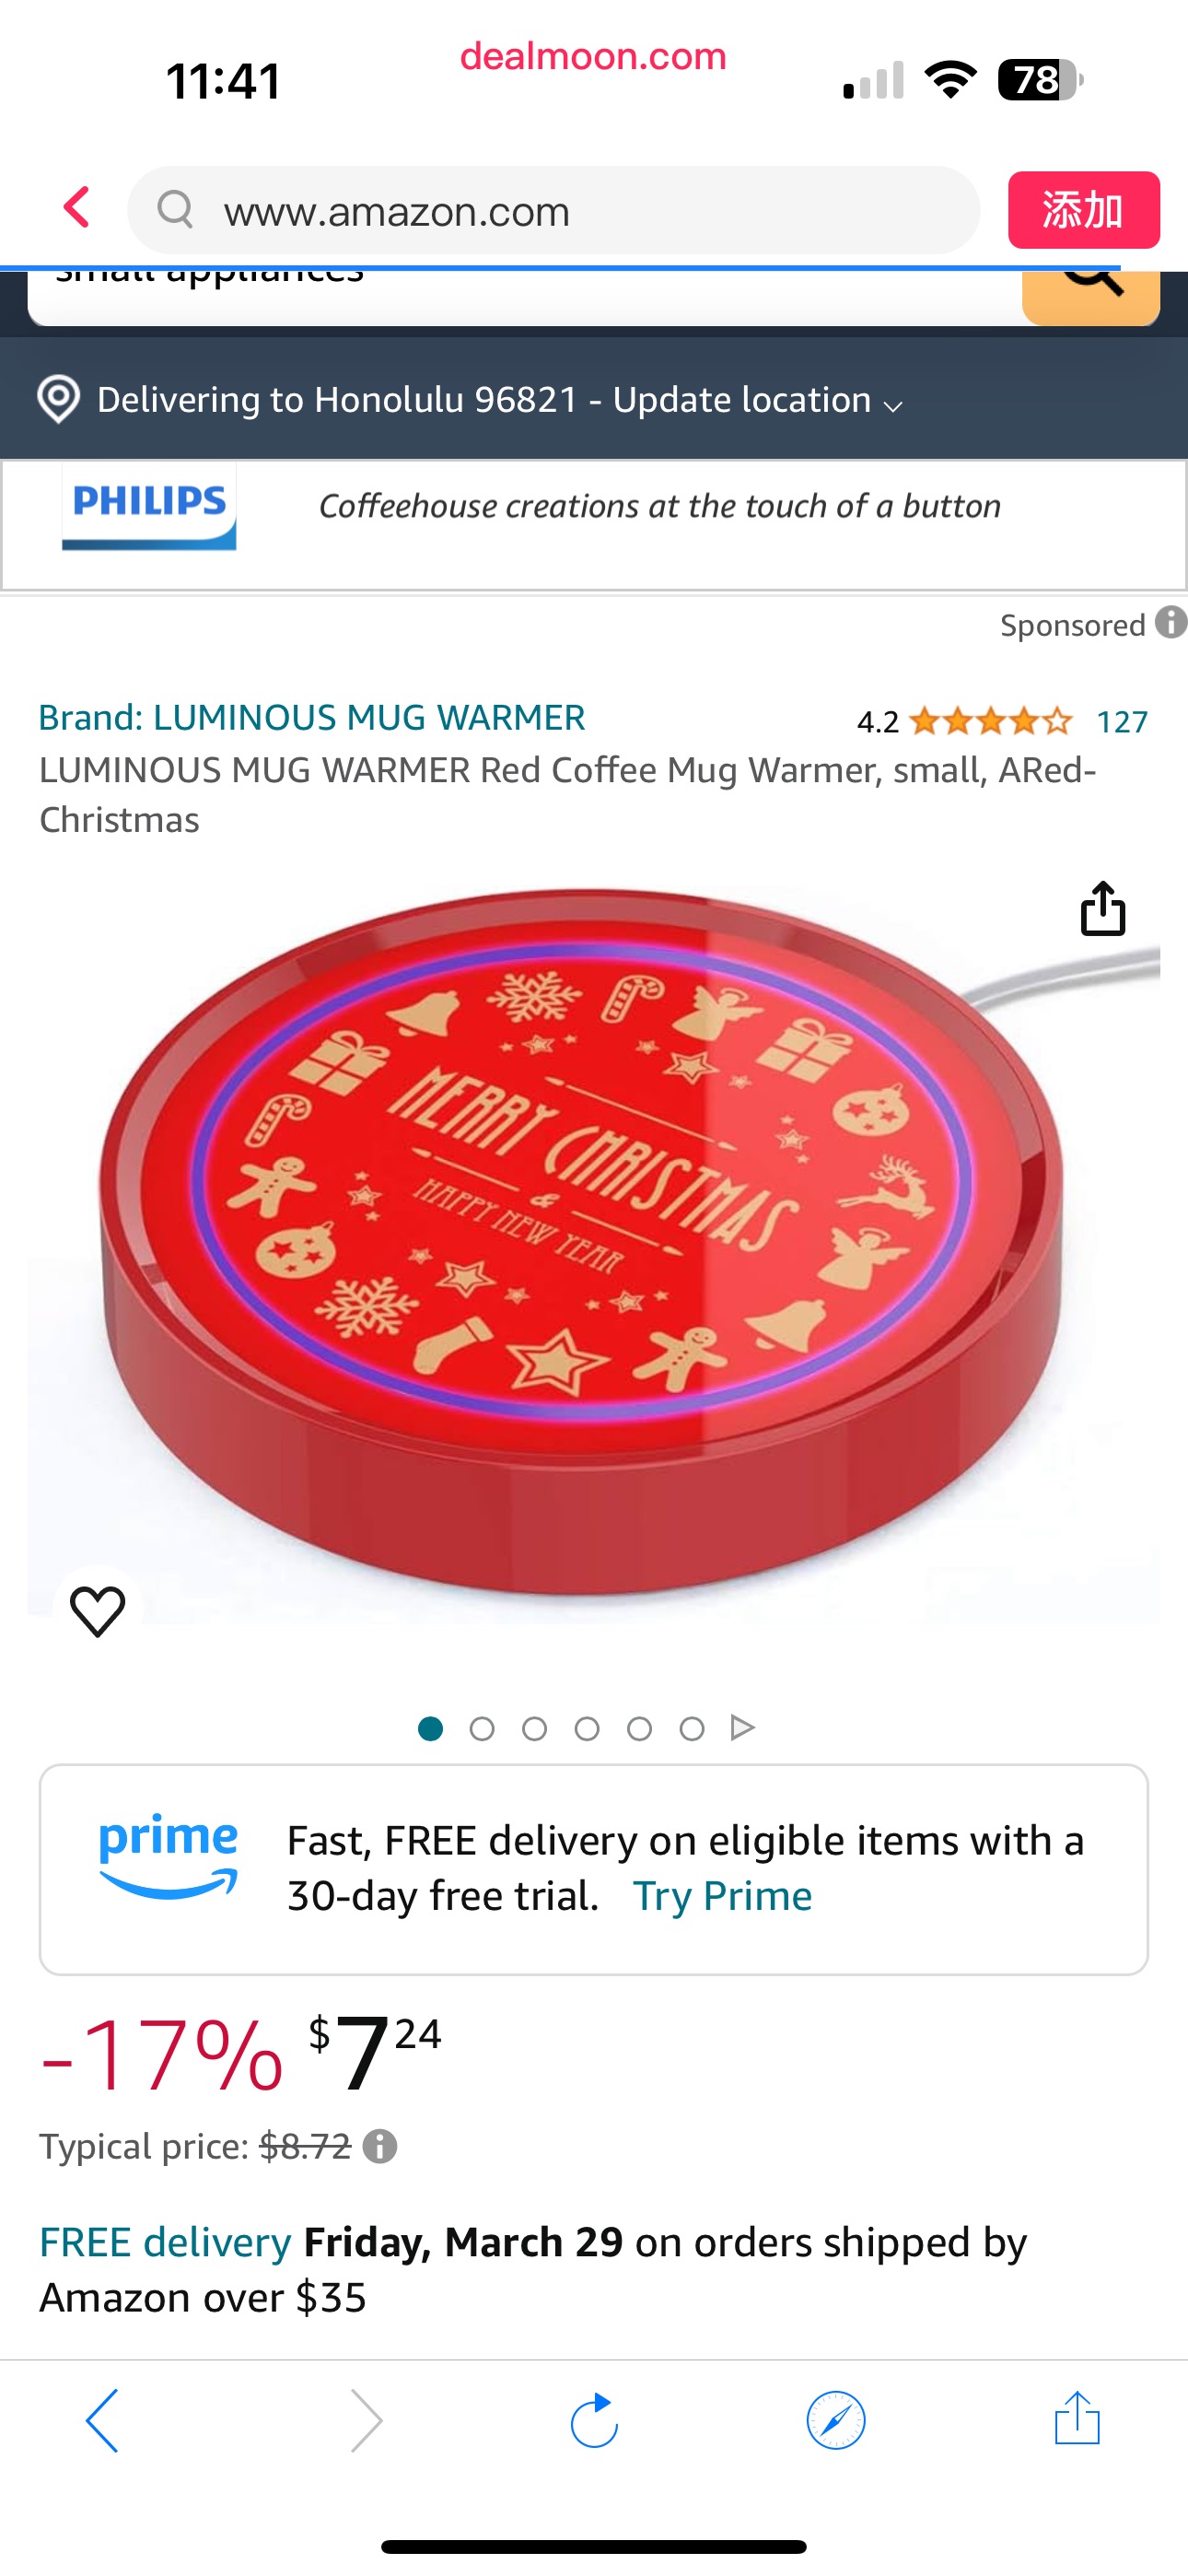 Amazon.com: LUMINOUS MUG WARMER Red Coffee Mug Warmer, small, ARed-Christmas: Home & Kitchen马克杯保温器 圣诞节款